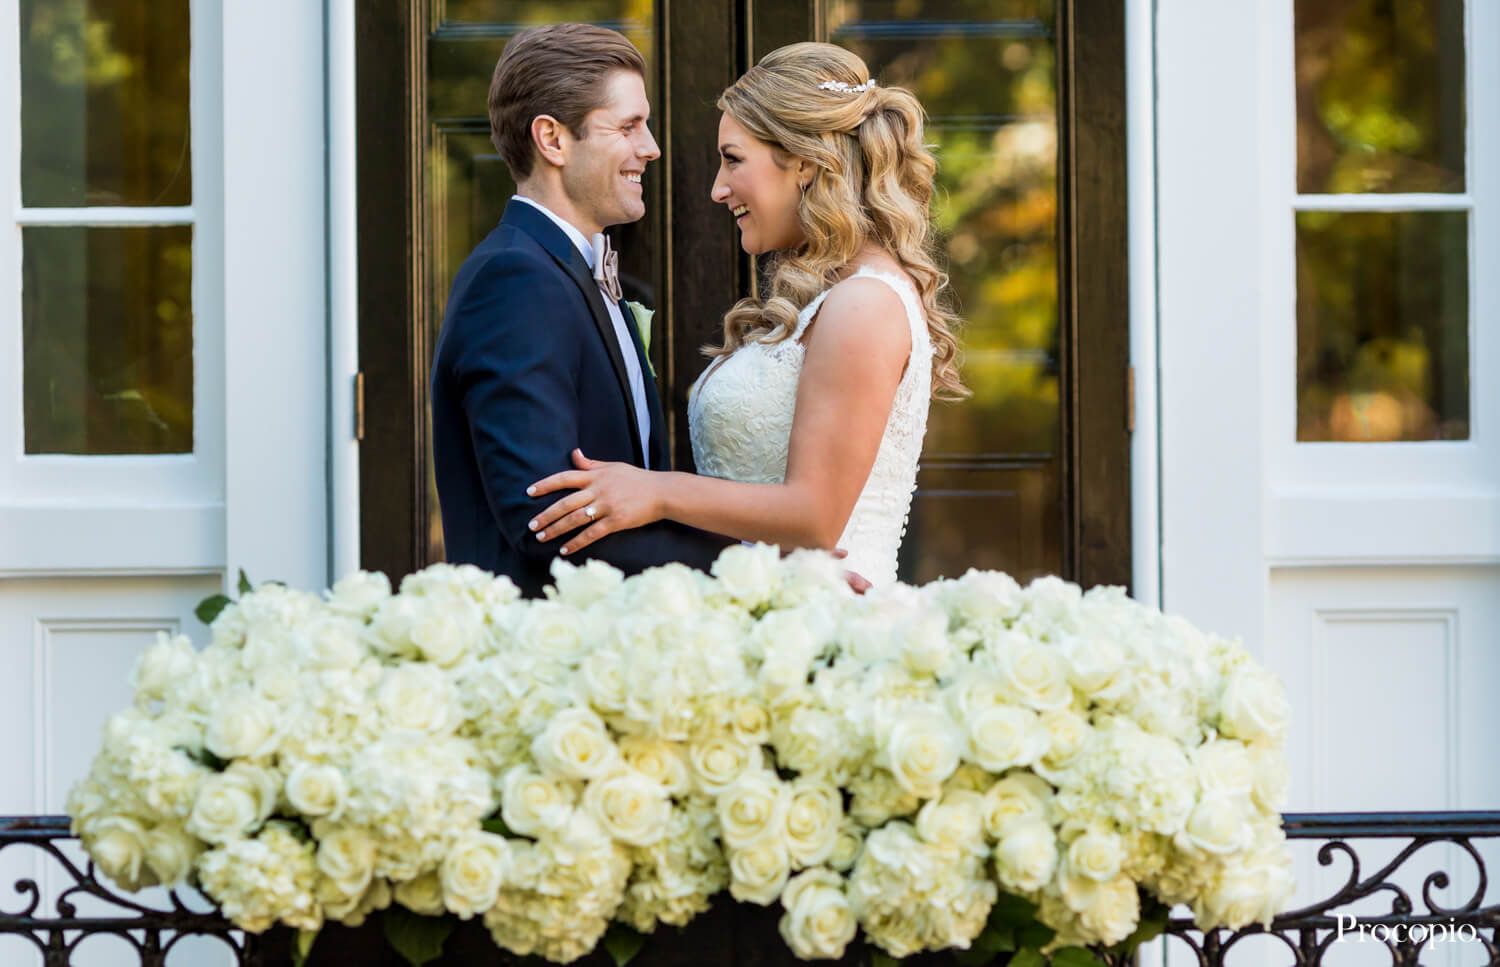 White rose floral decor - best Washington wedding planner - Sara Muchnick Events  - photo by Procopio Photography